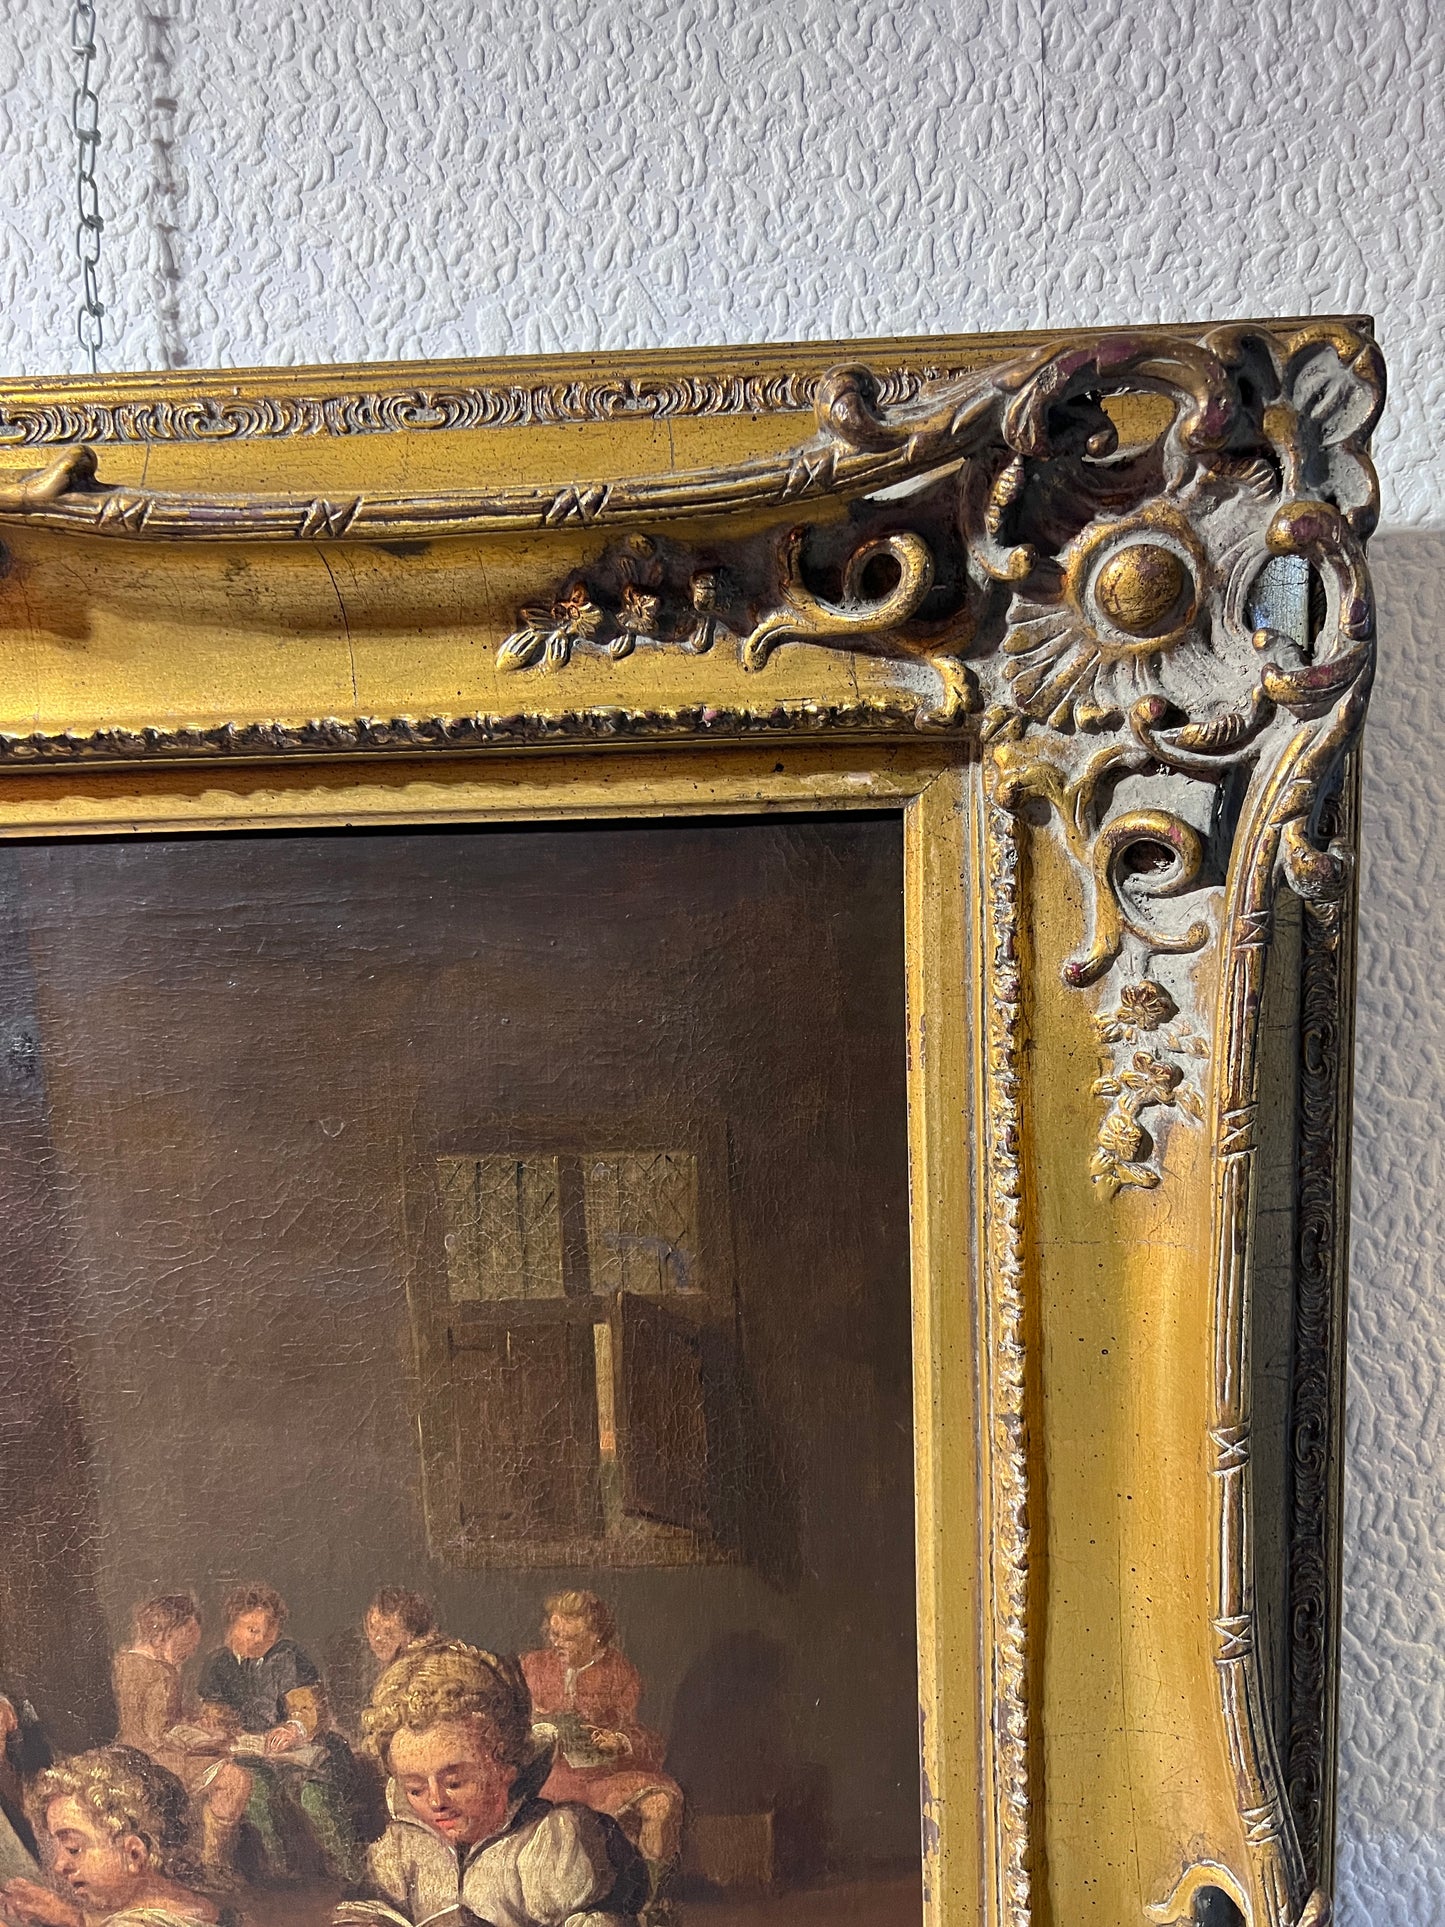 Antique A.Van Ostade Dutch School original oil painting on canvas, Genre scene